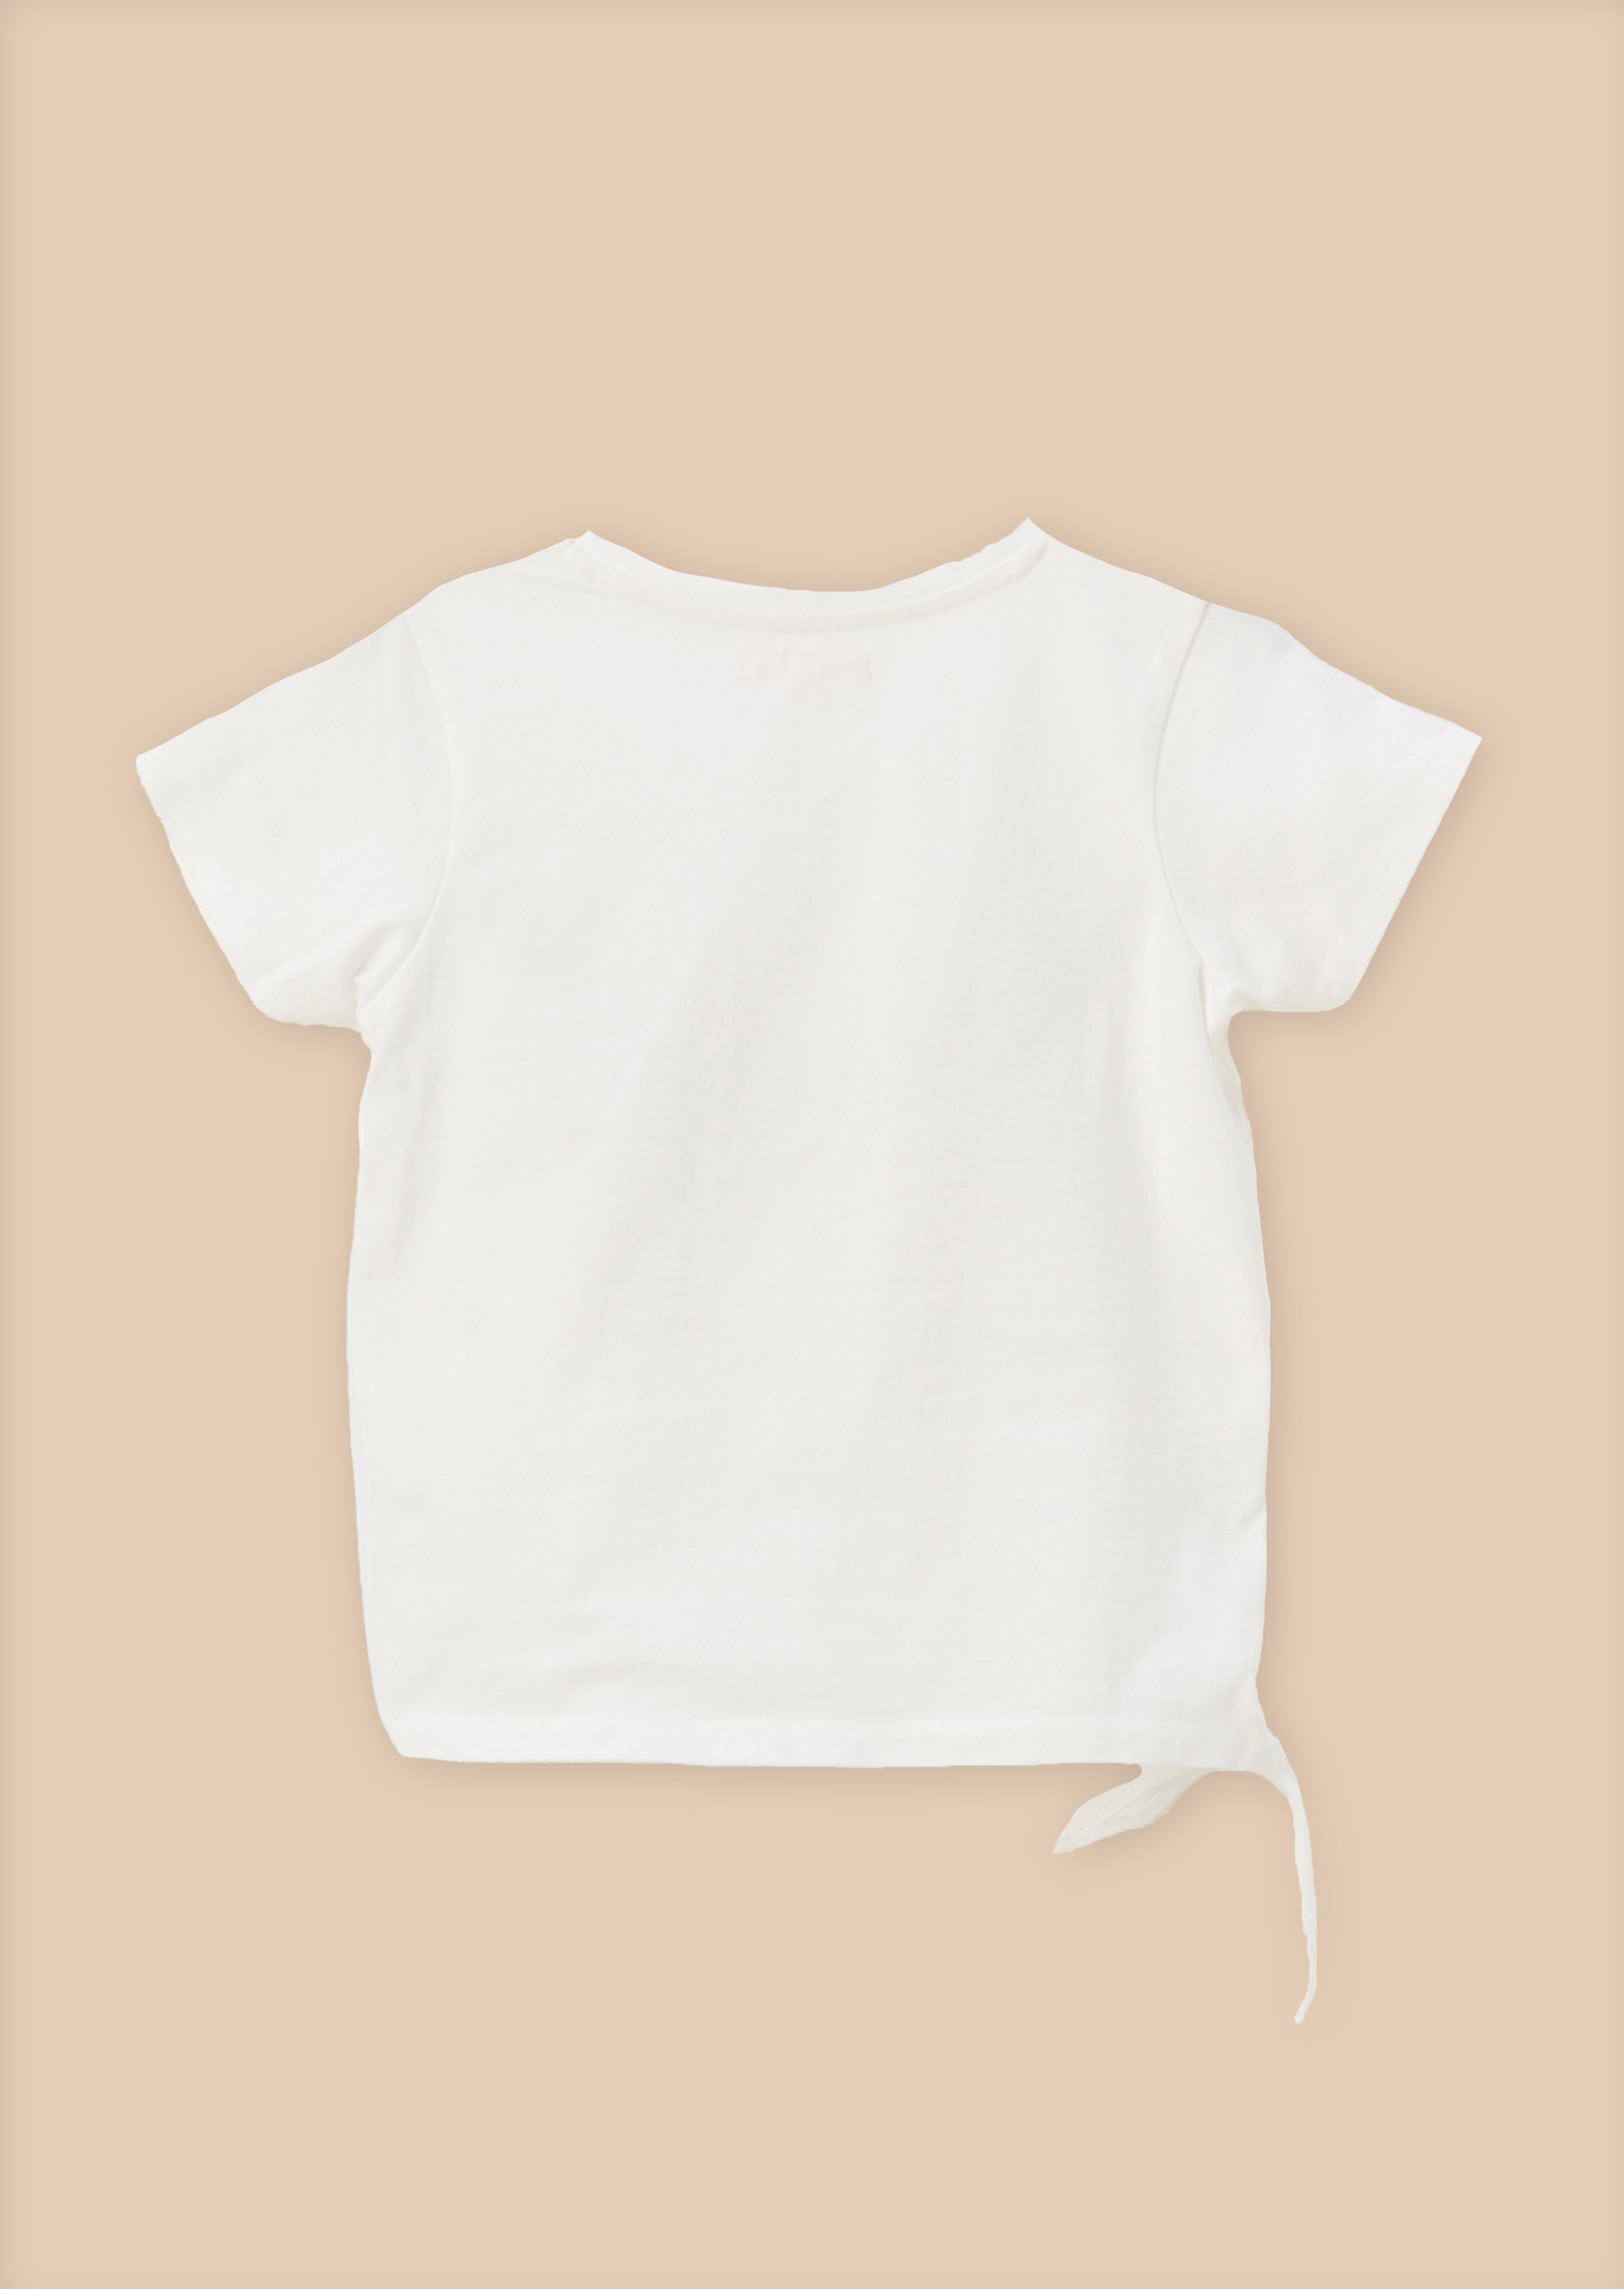 Slogan Printed Girls White T-Shirt